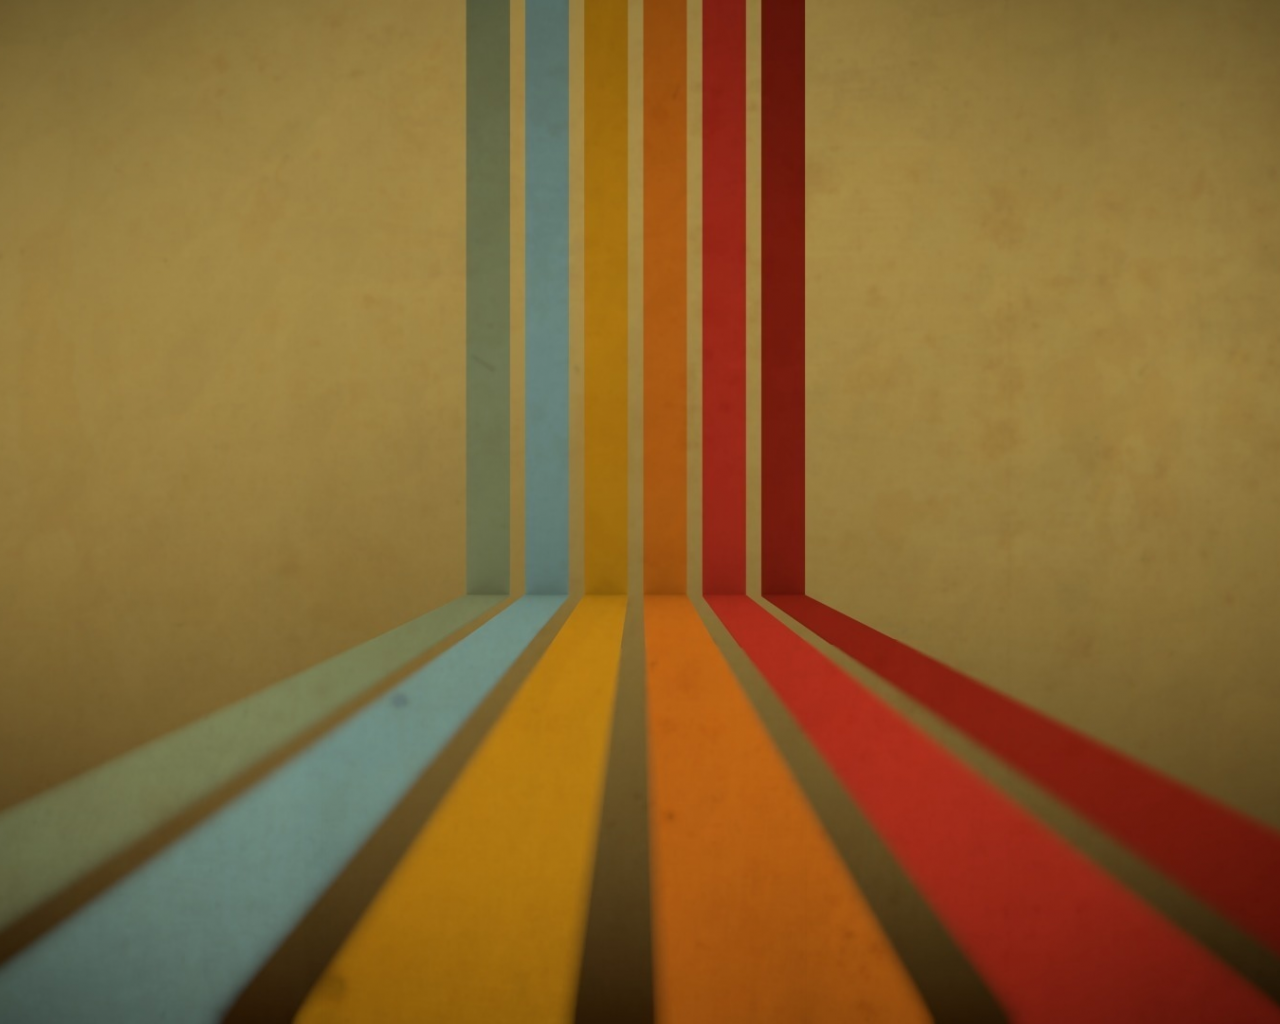 rainbow, lines, abstraction, линий, 1920x1080, краски, полосы, stripes, colors, абстракция, радуга